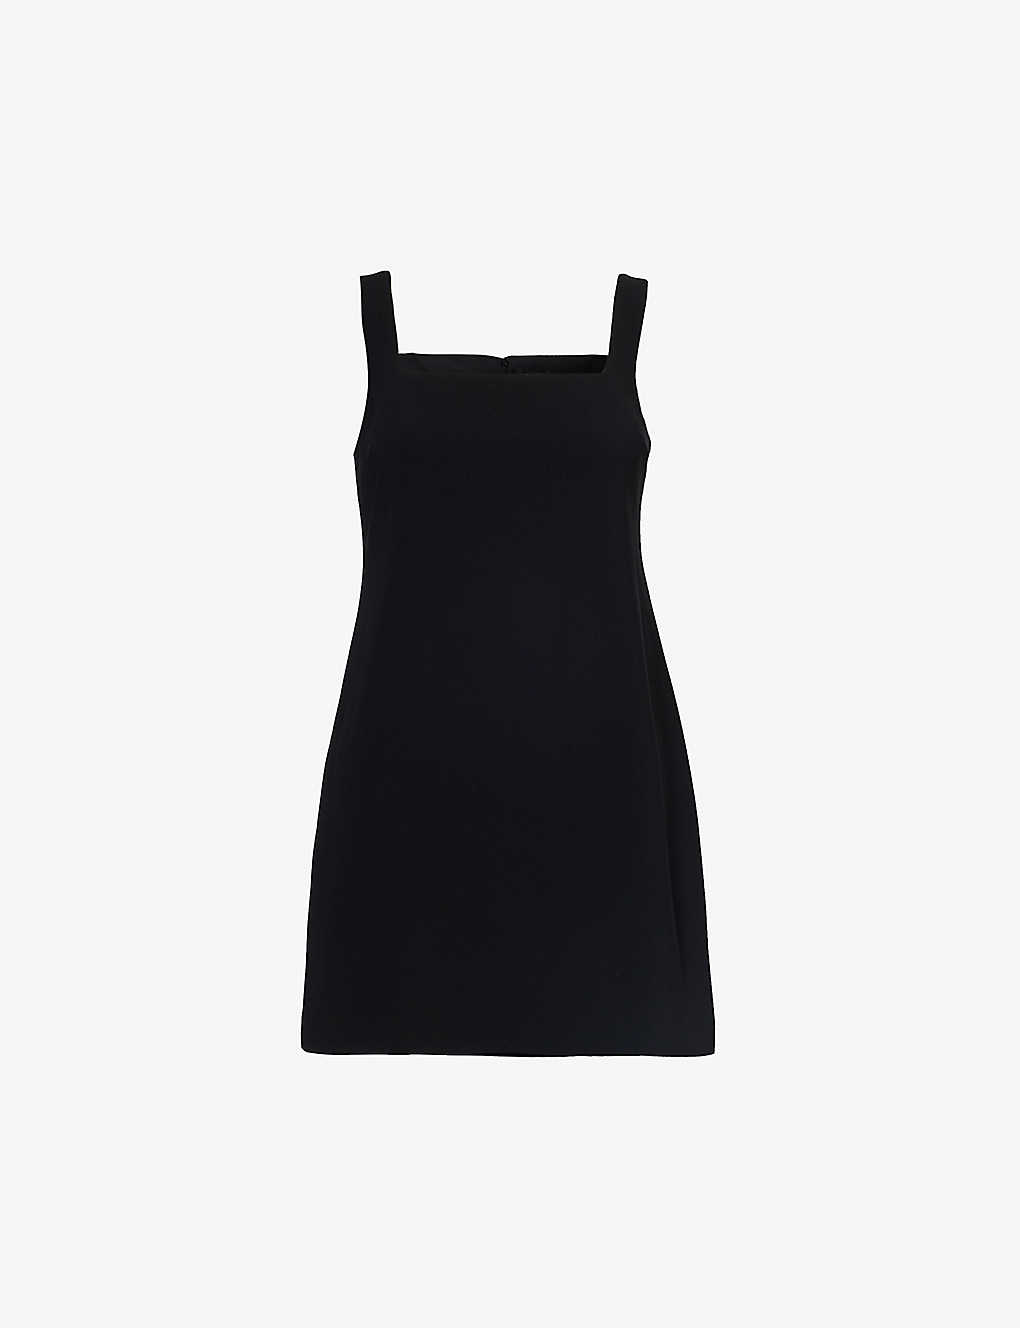 Shop Theory Women's Black Square-neck Sleeveless Woven Mini Dress